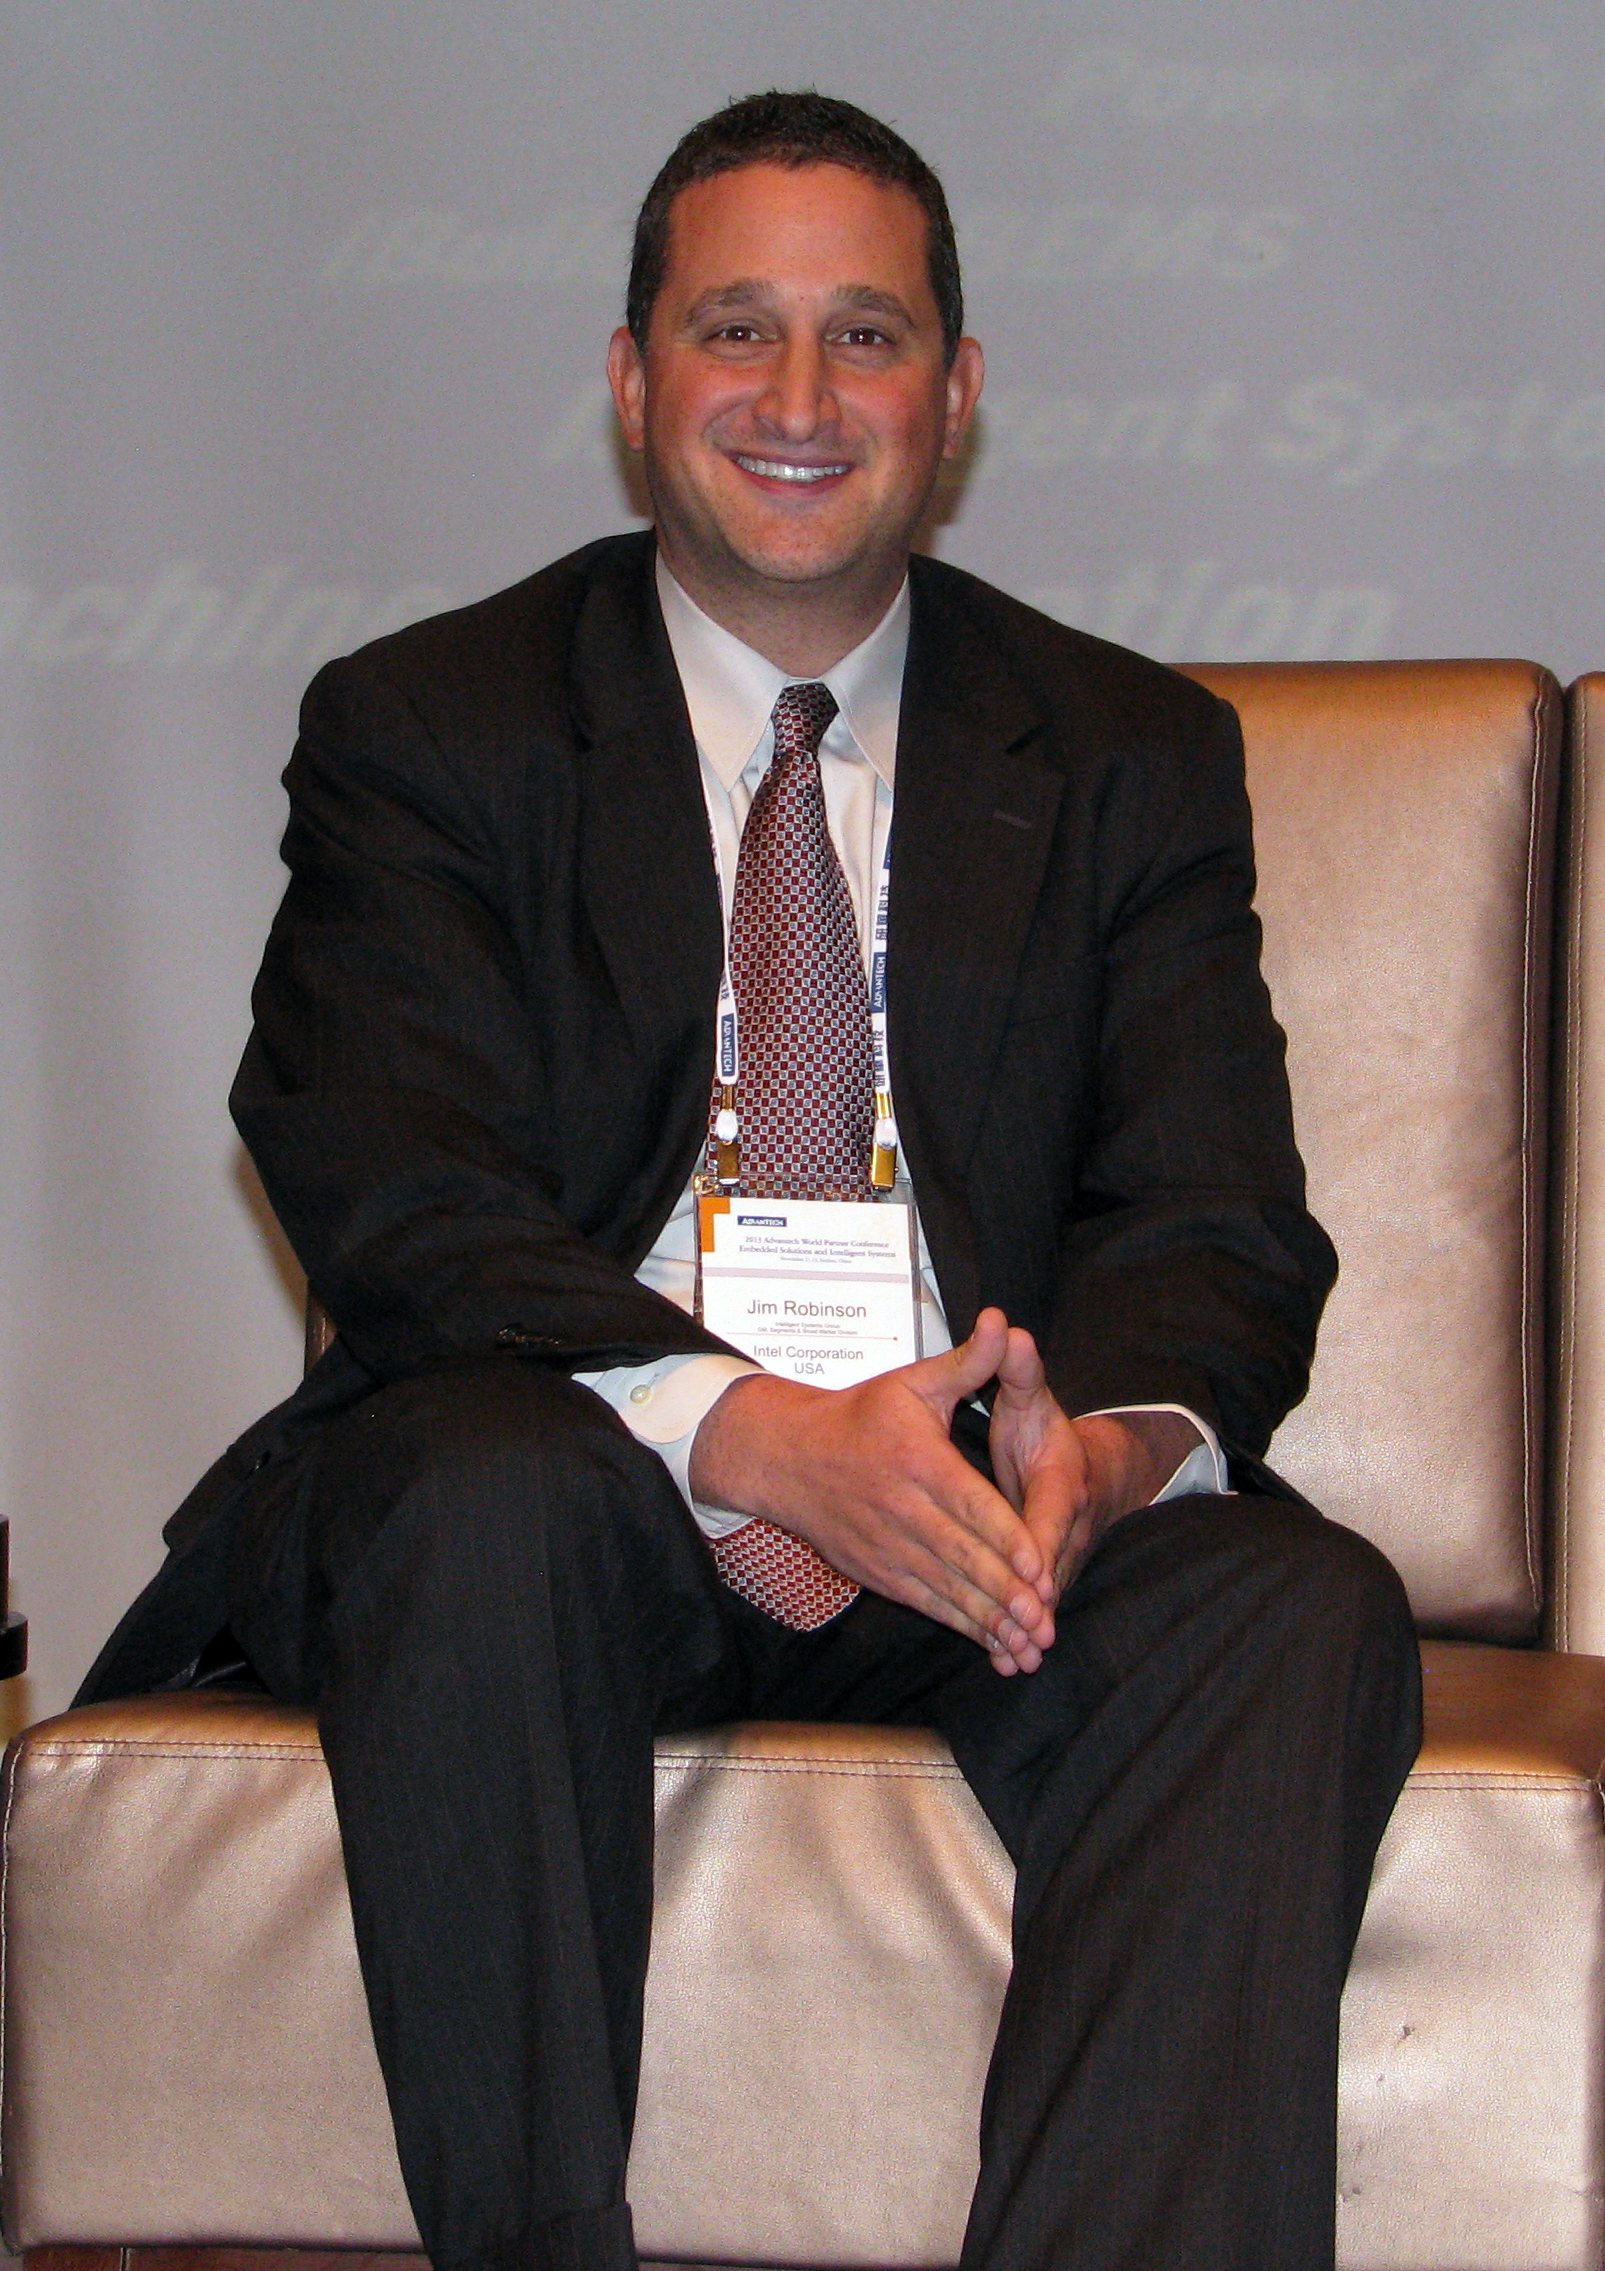 Jim Robinson, General Manager, Intel